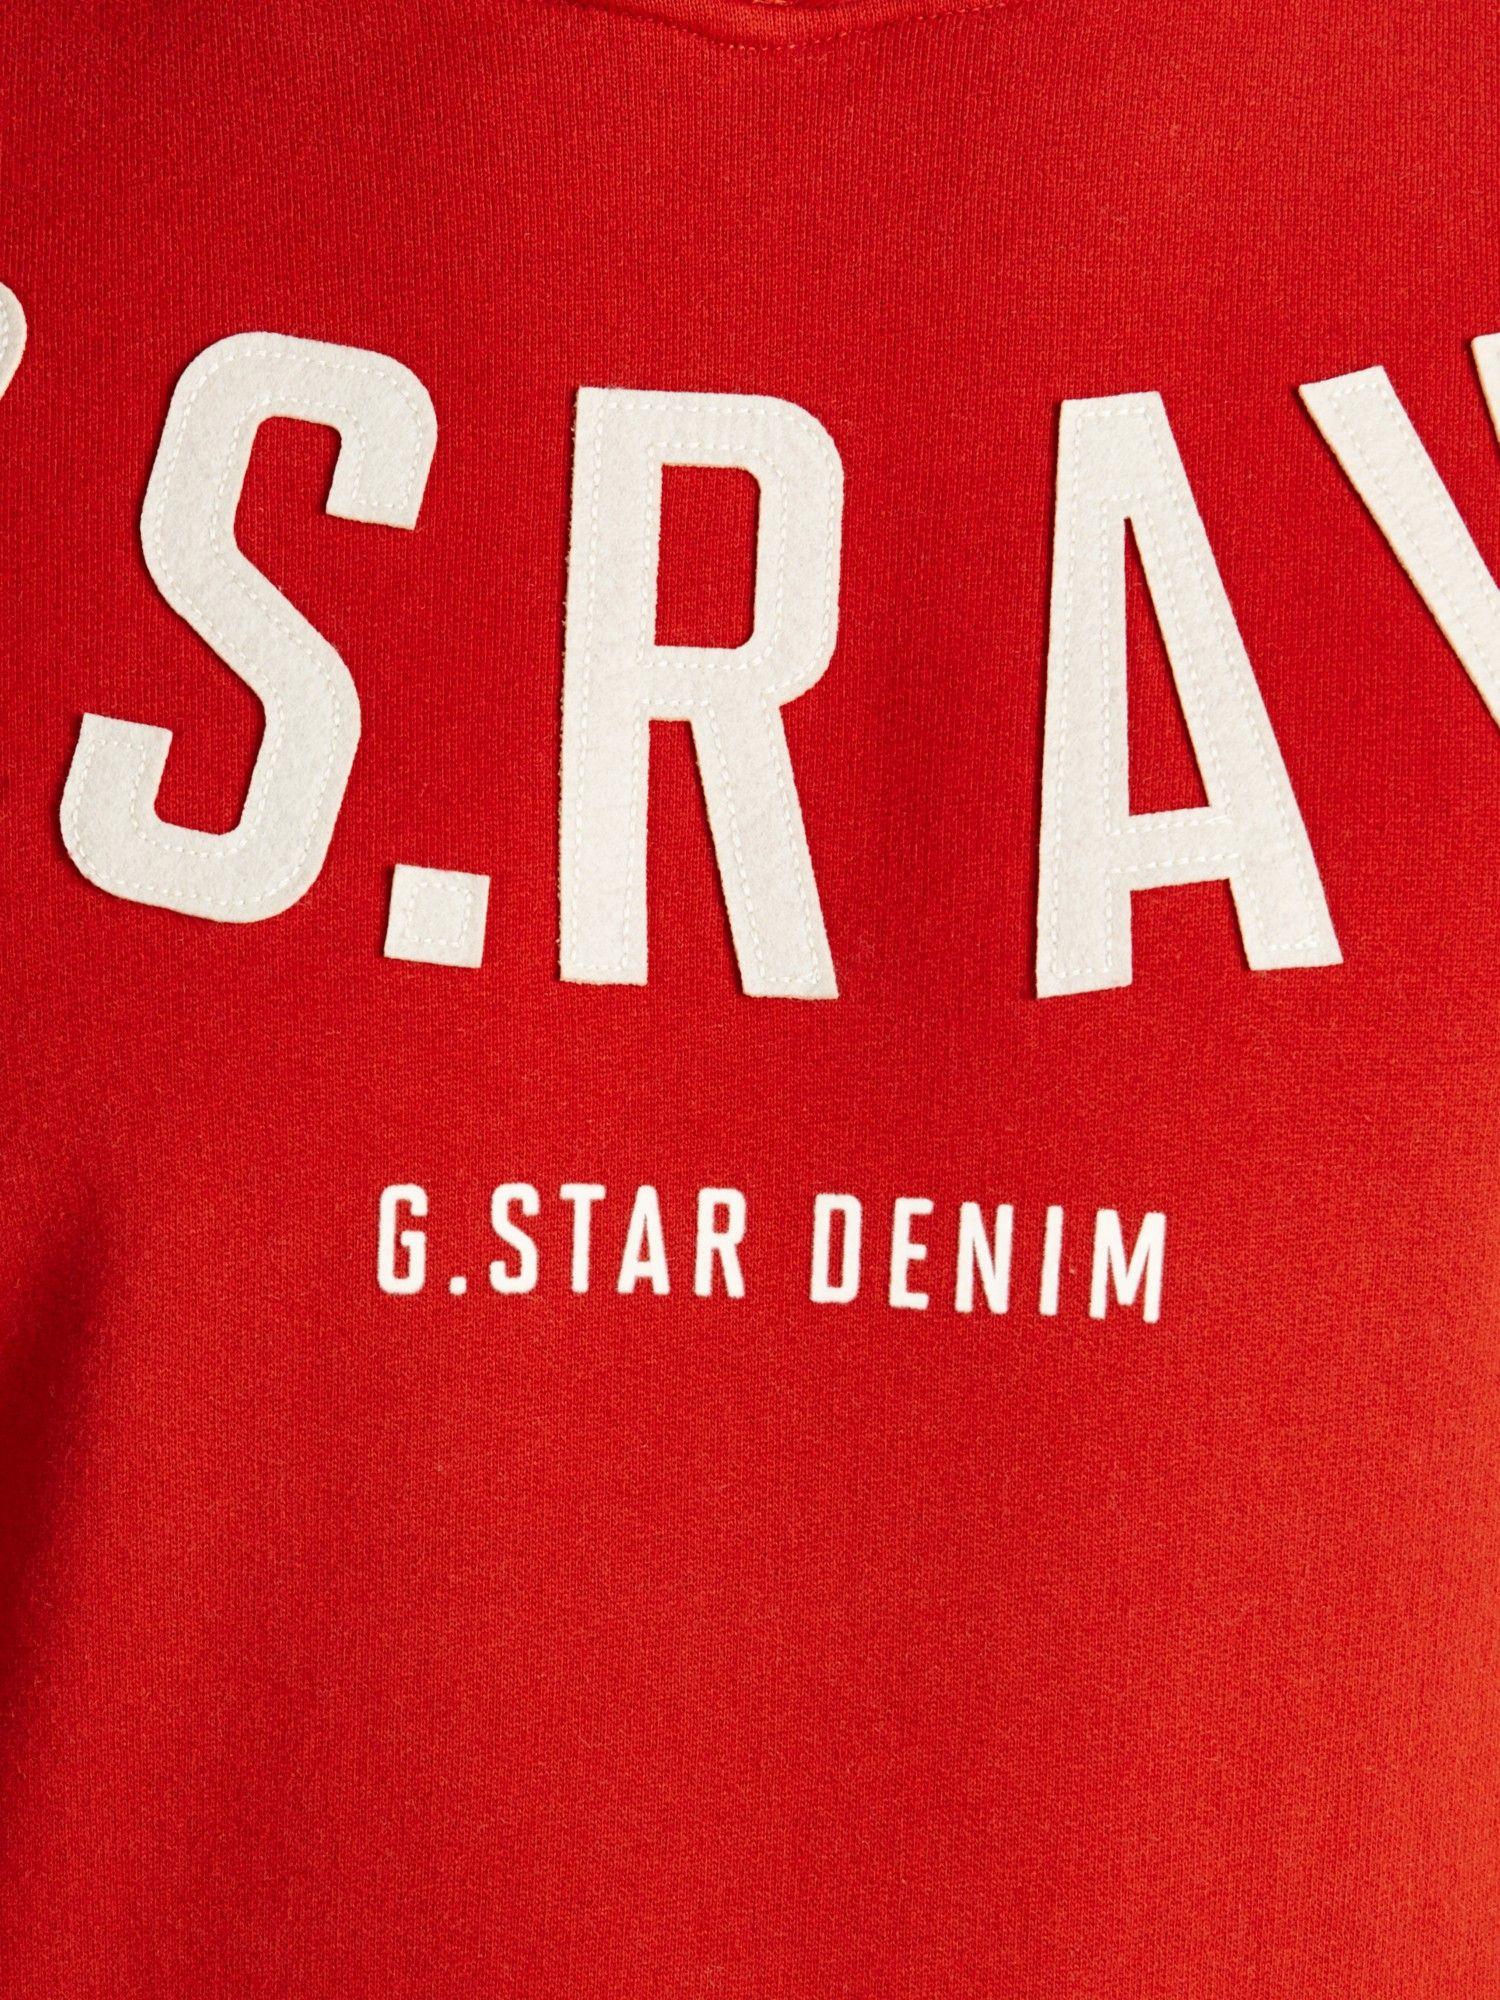 G-Star Logo - G-Star RAW Kain Logo Print Hoodie in Red for Men - Lyst